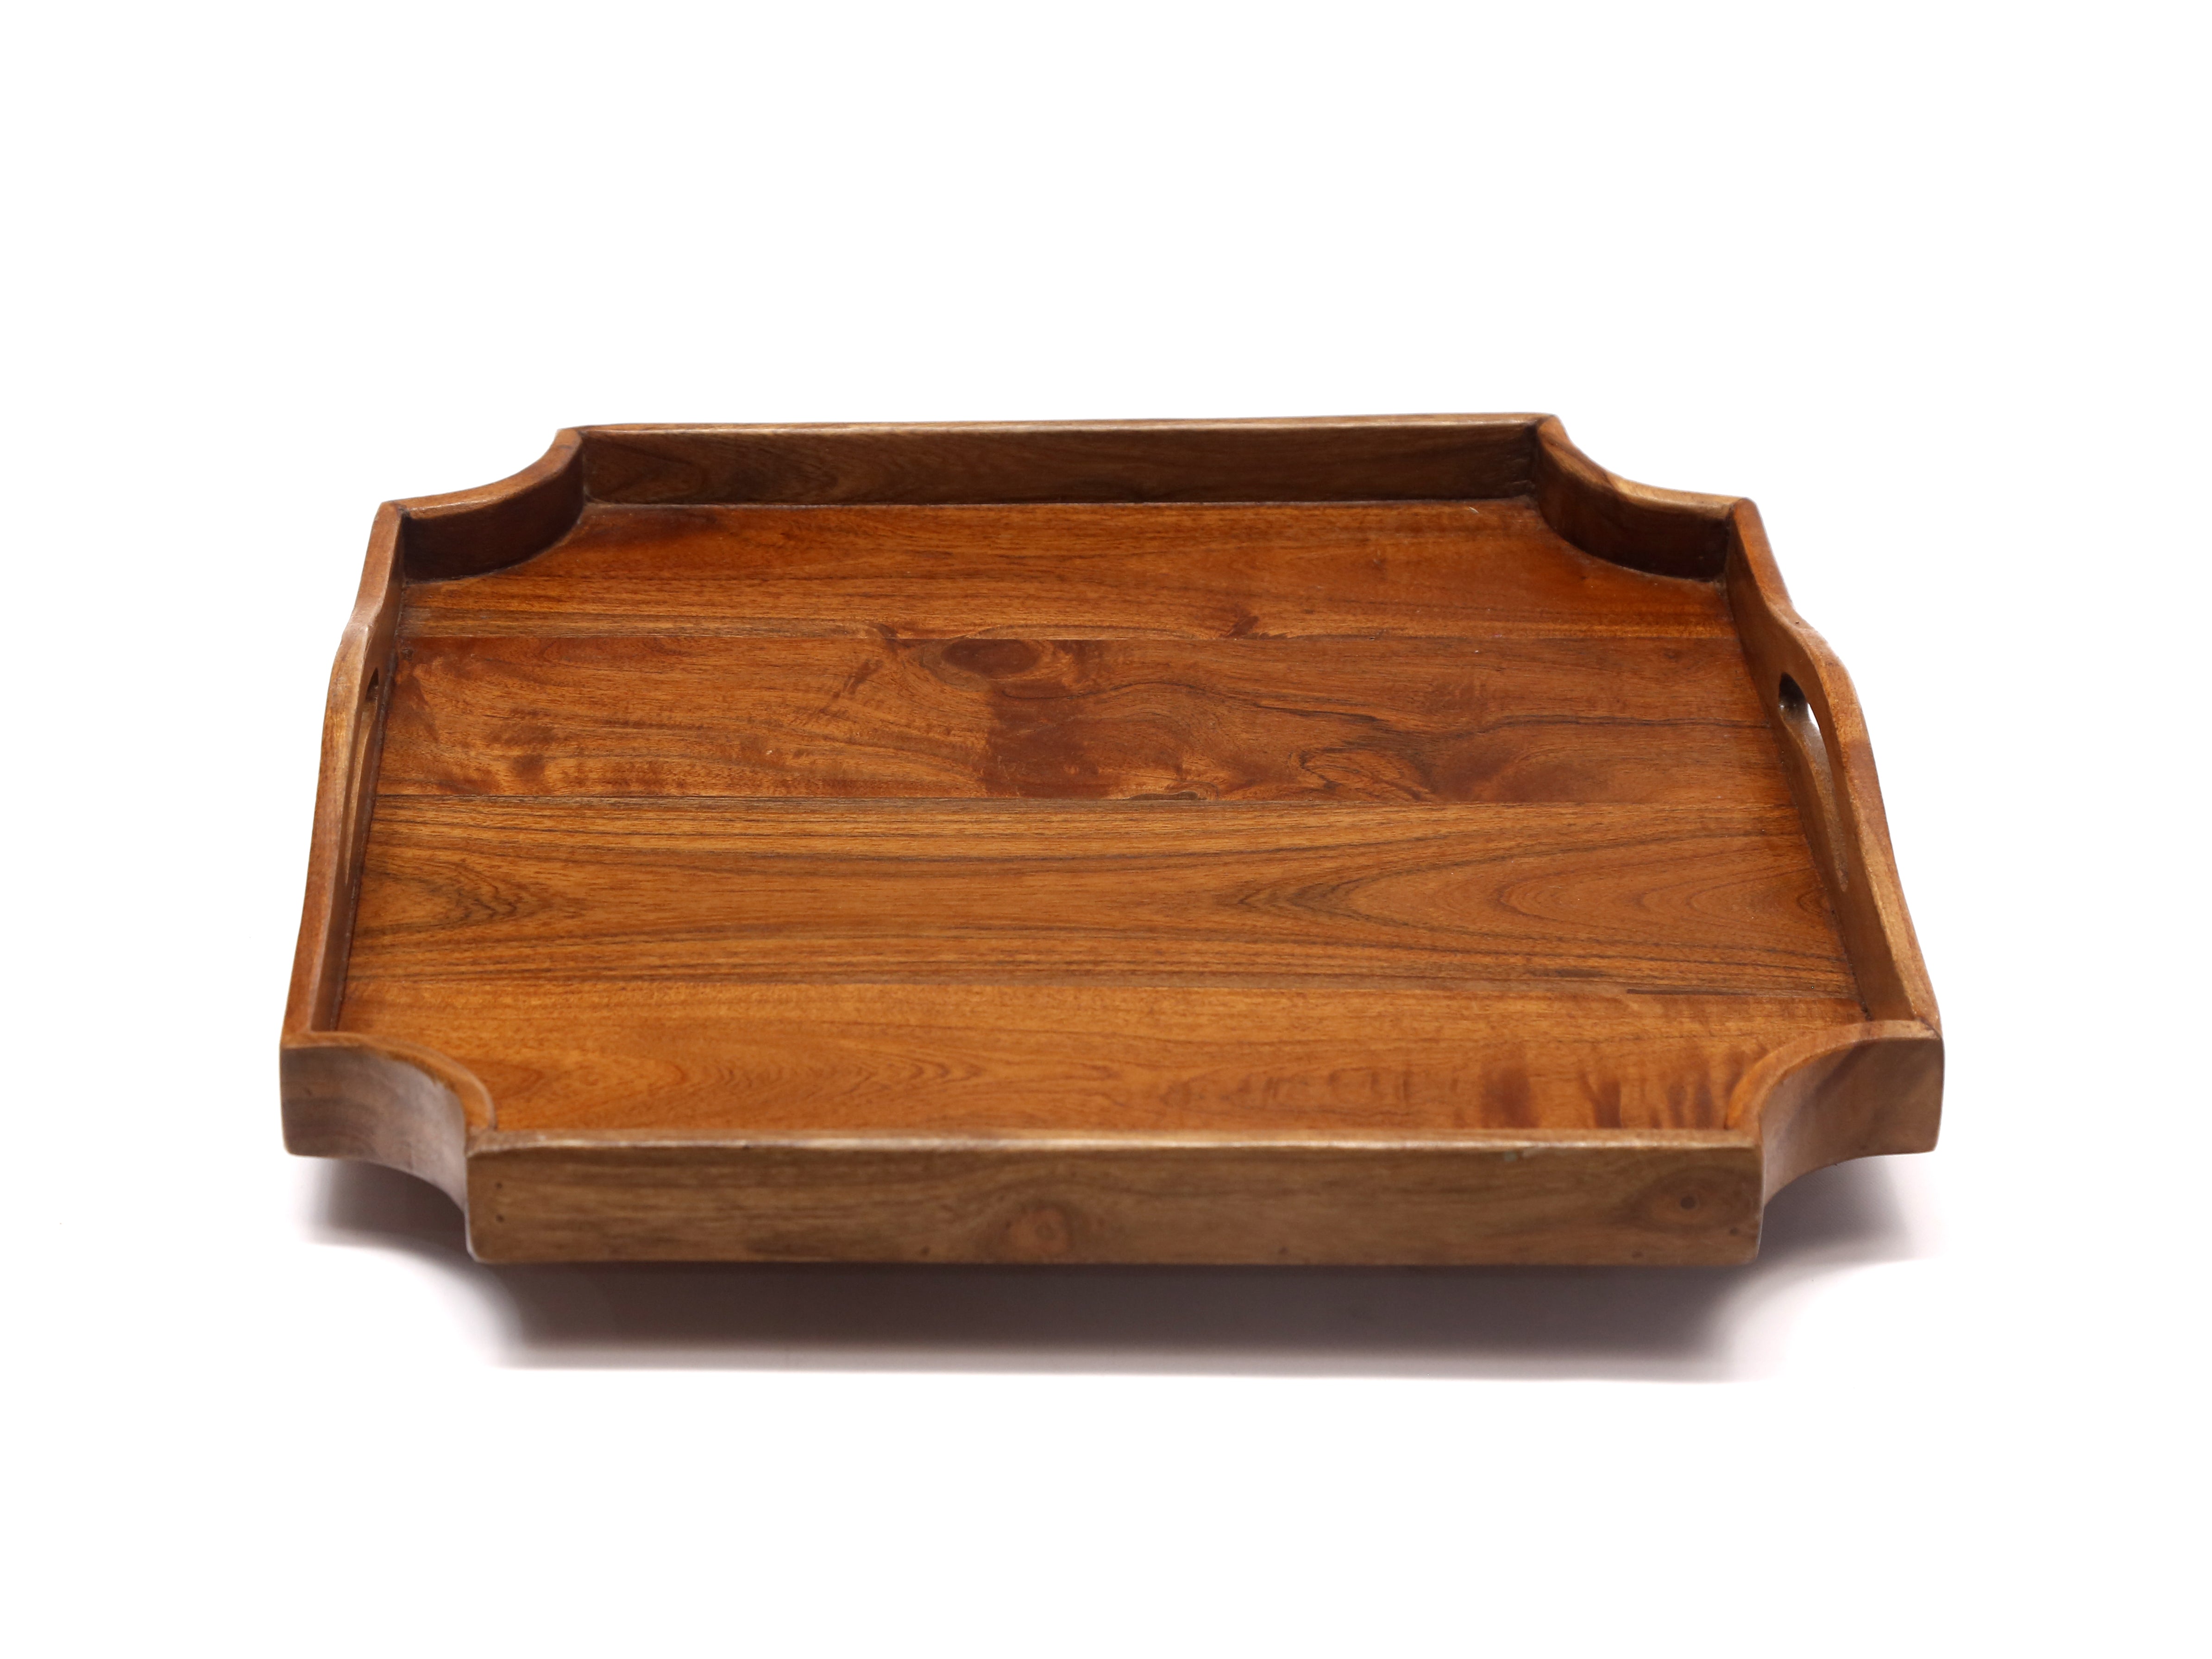 Wooden Abstract-shaped Tray Set Tray